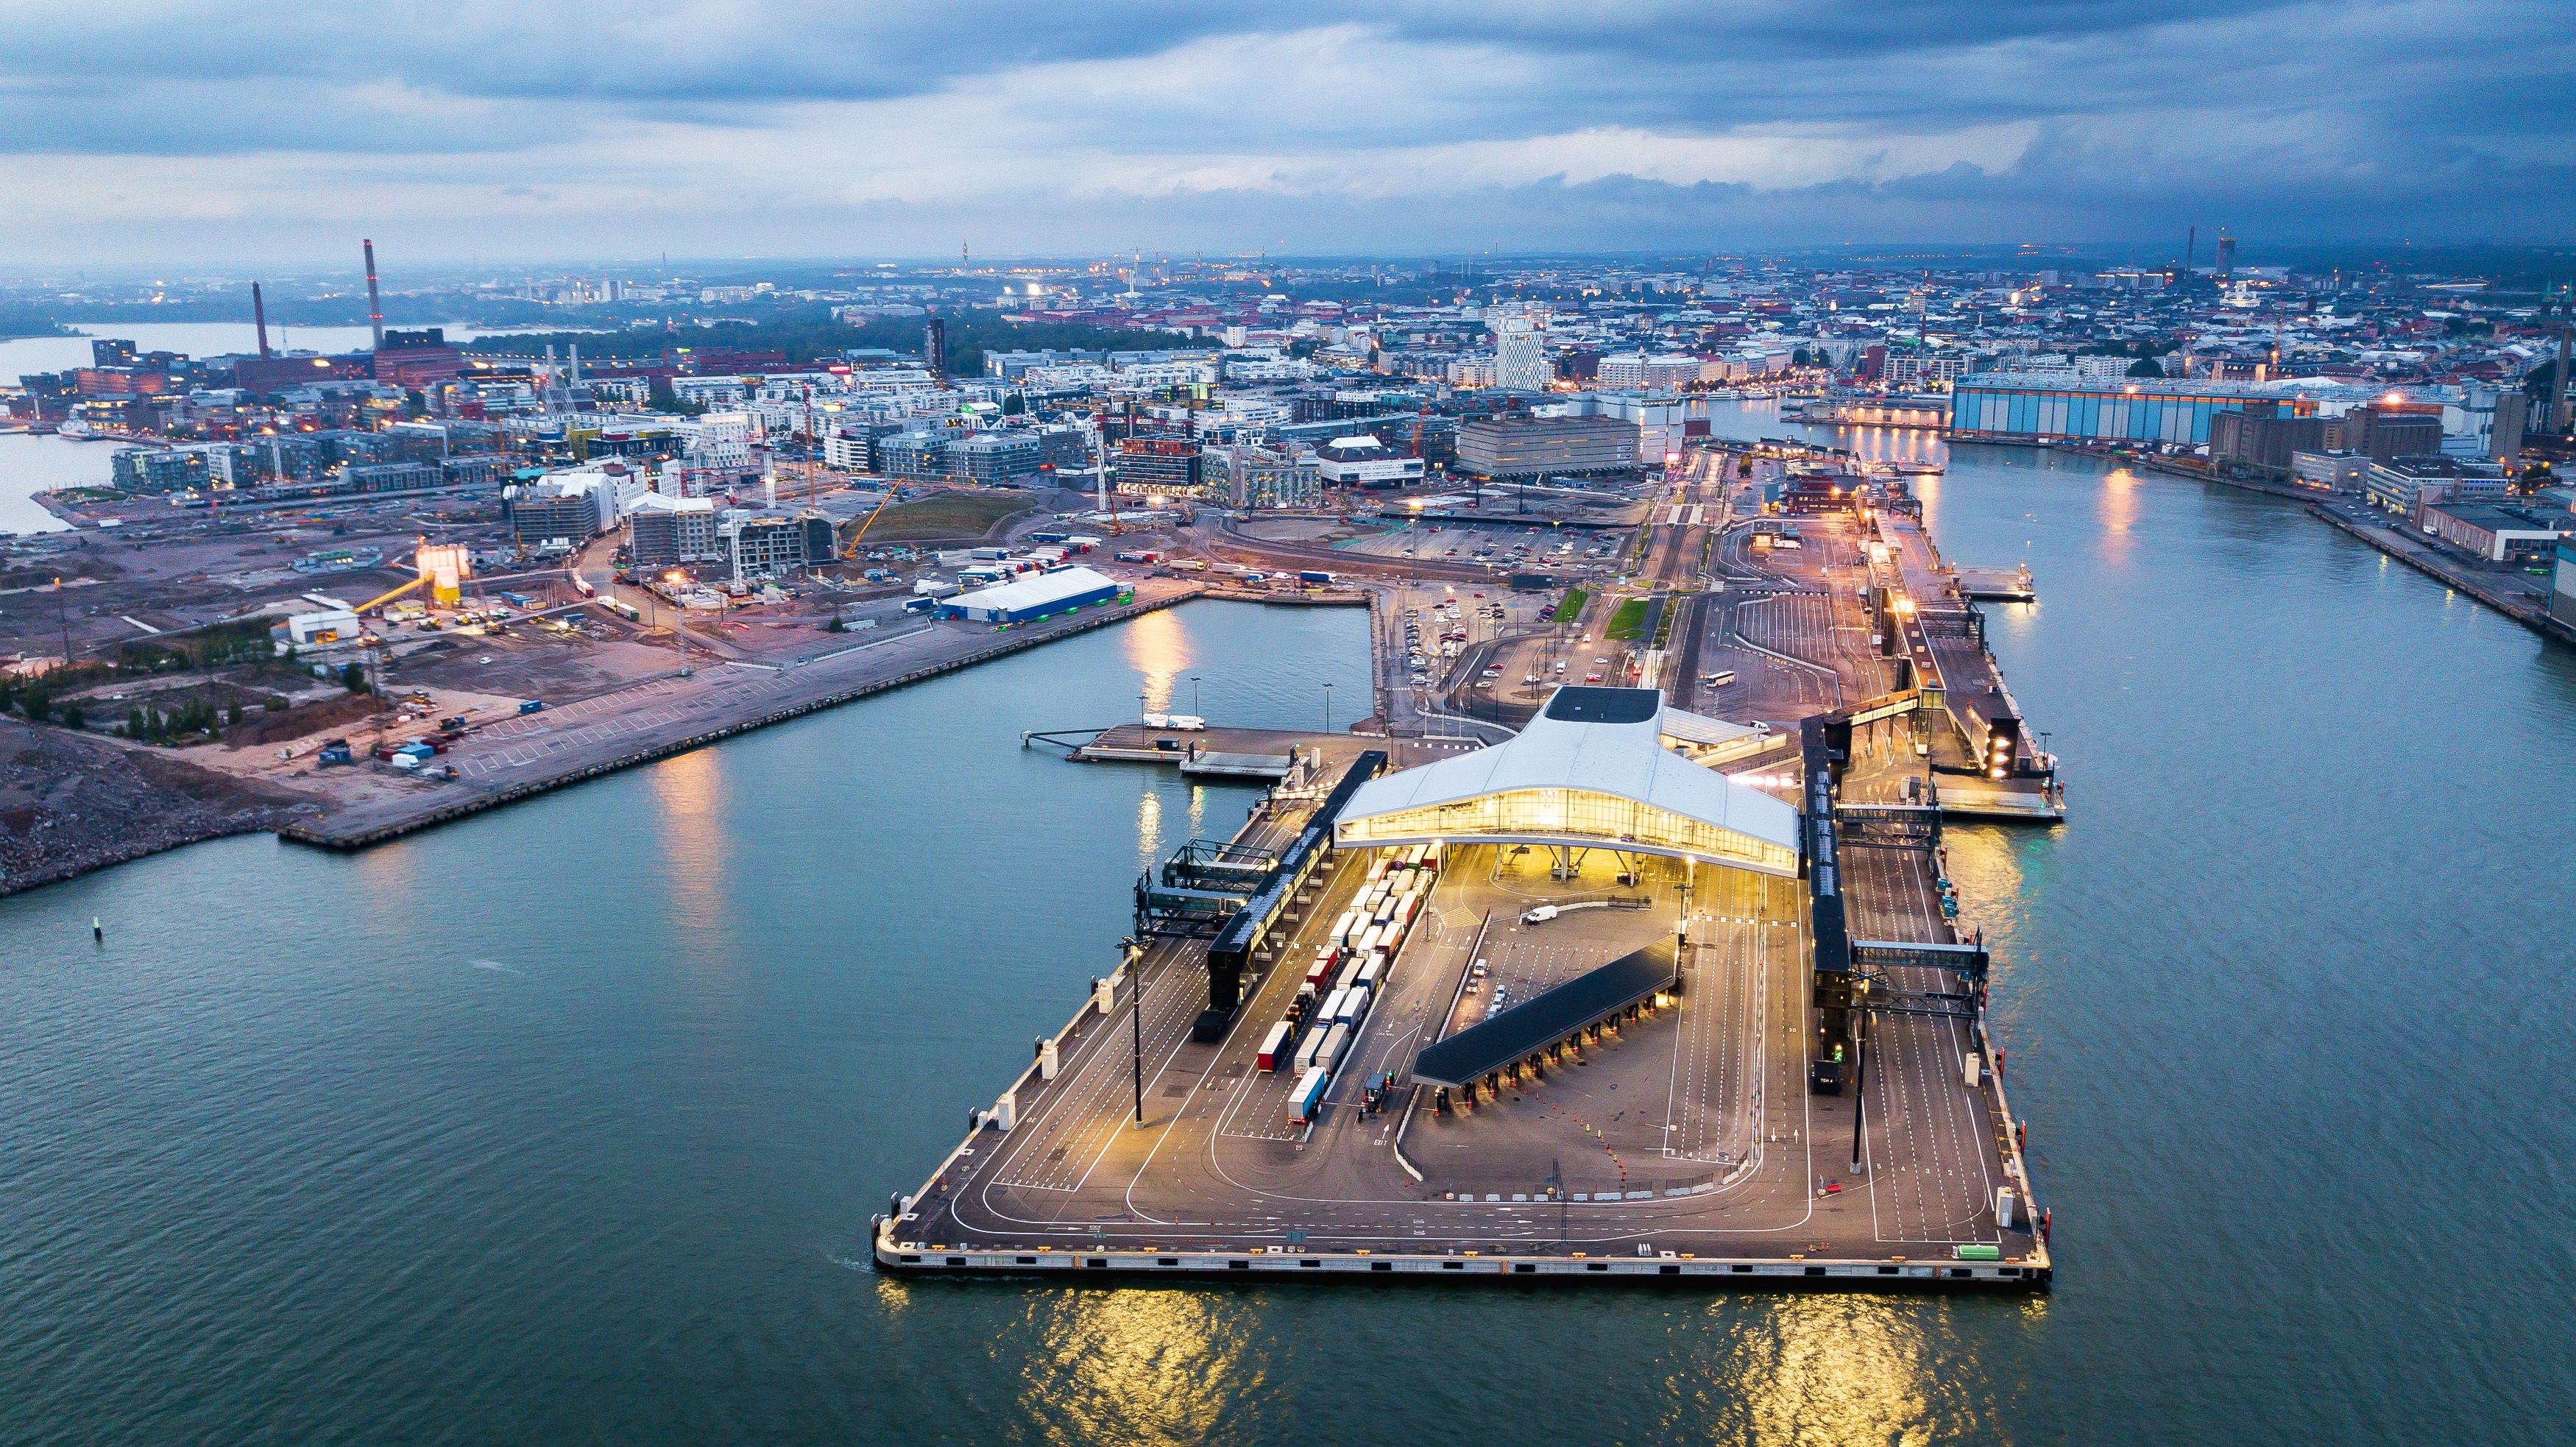 The port of Helsinki